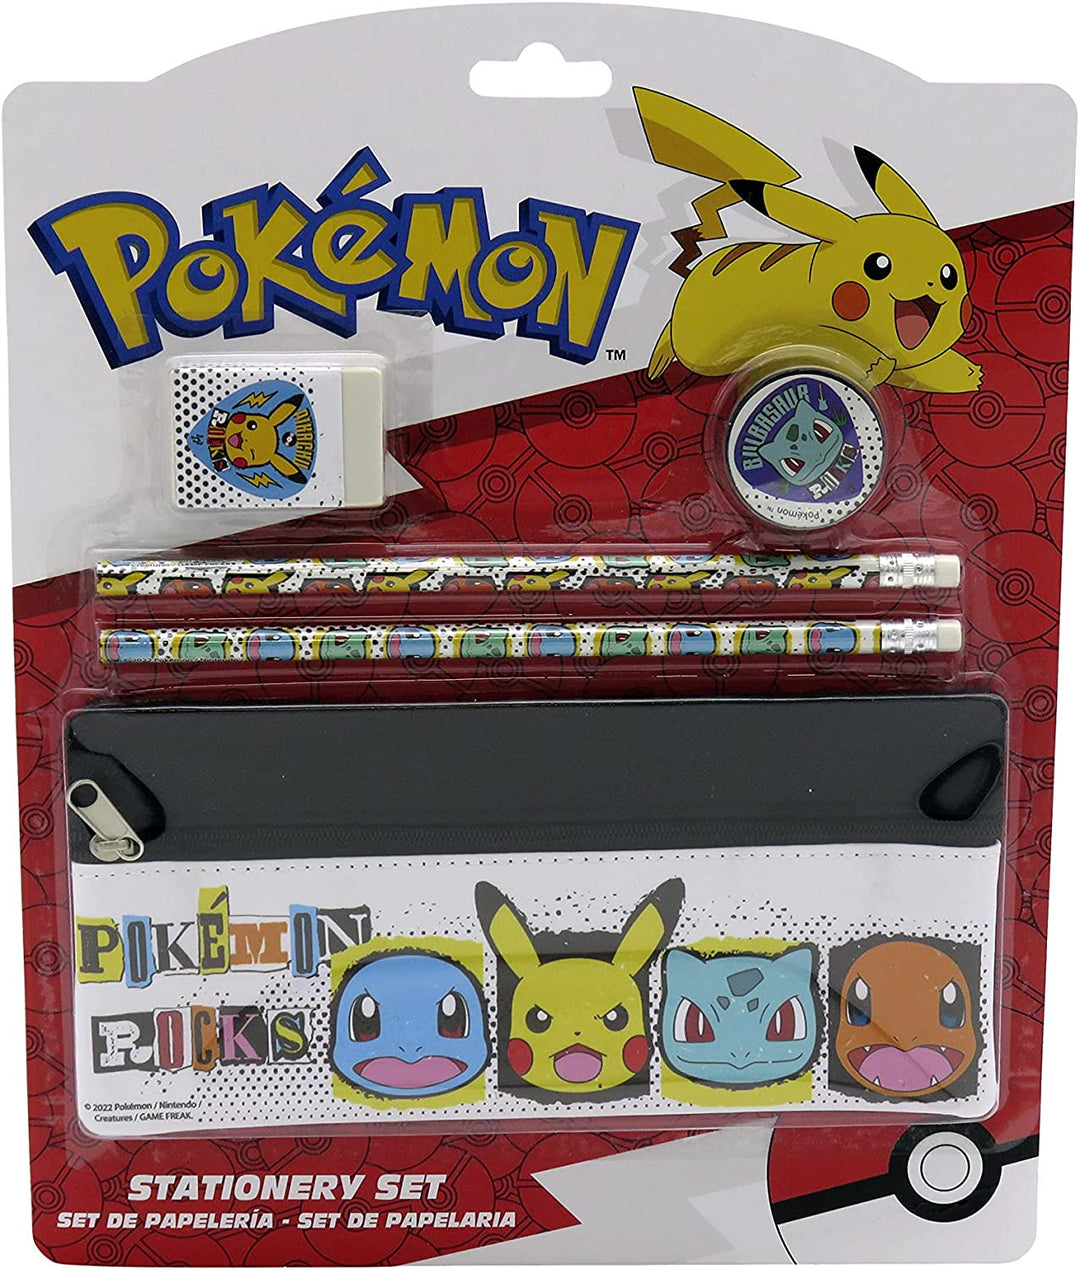 Stationery Set with Pokemon Case (CyP Brands)